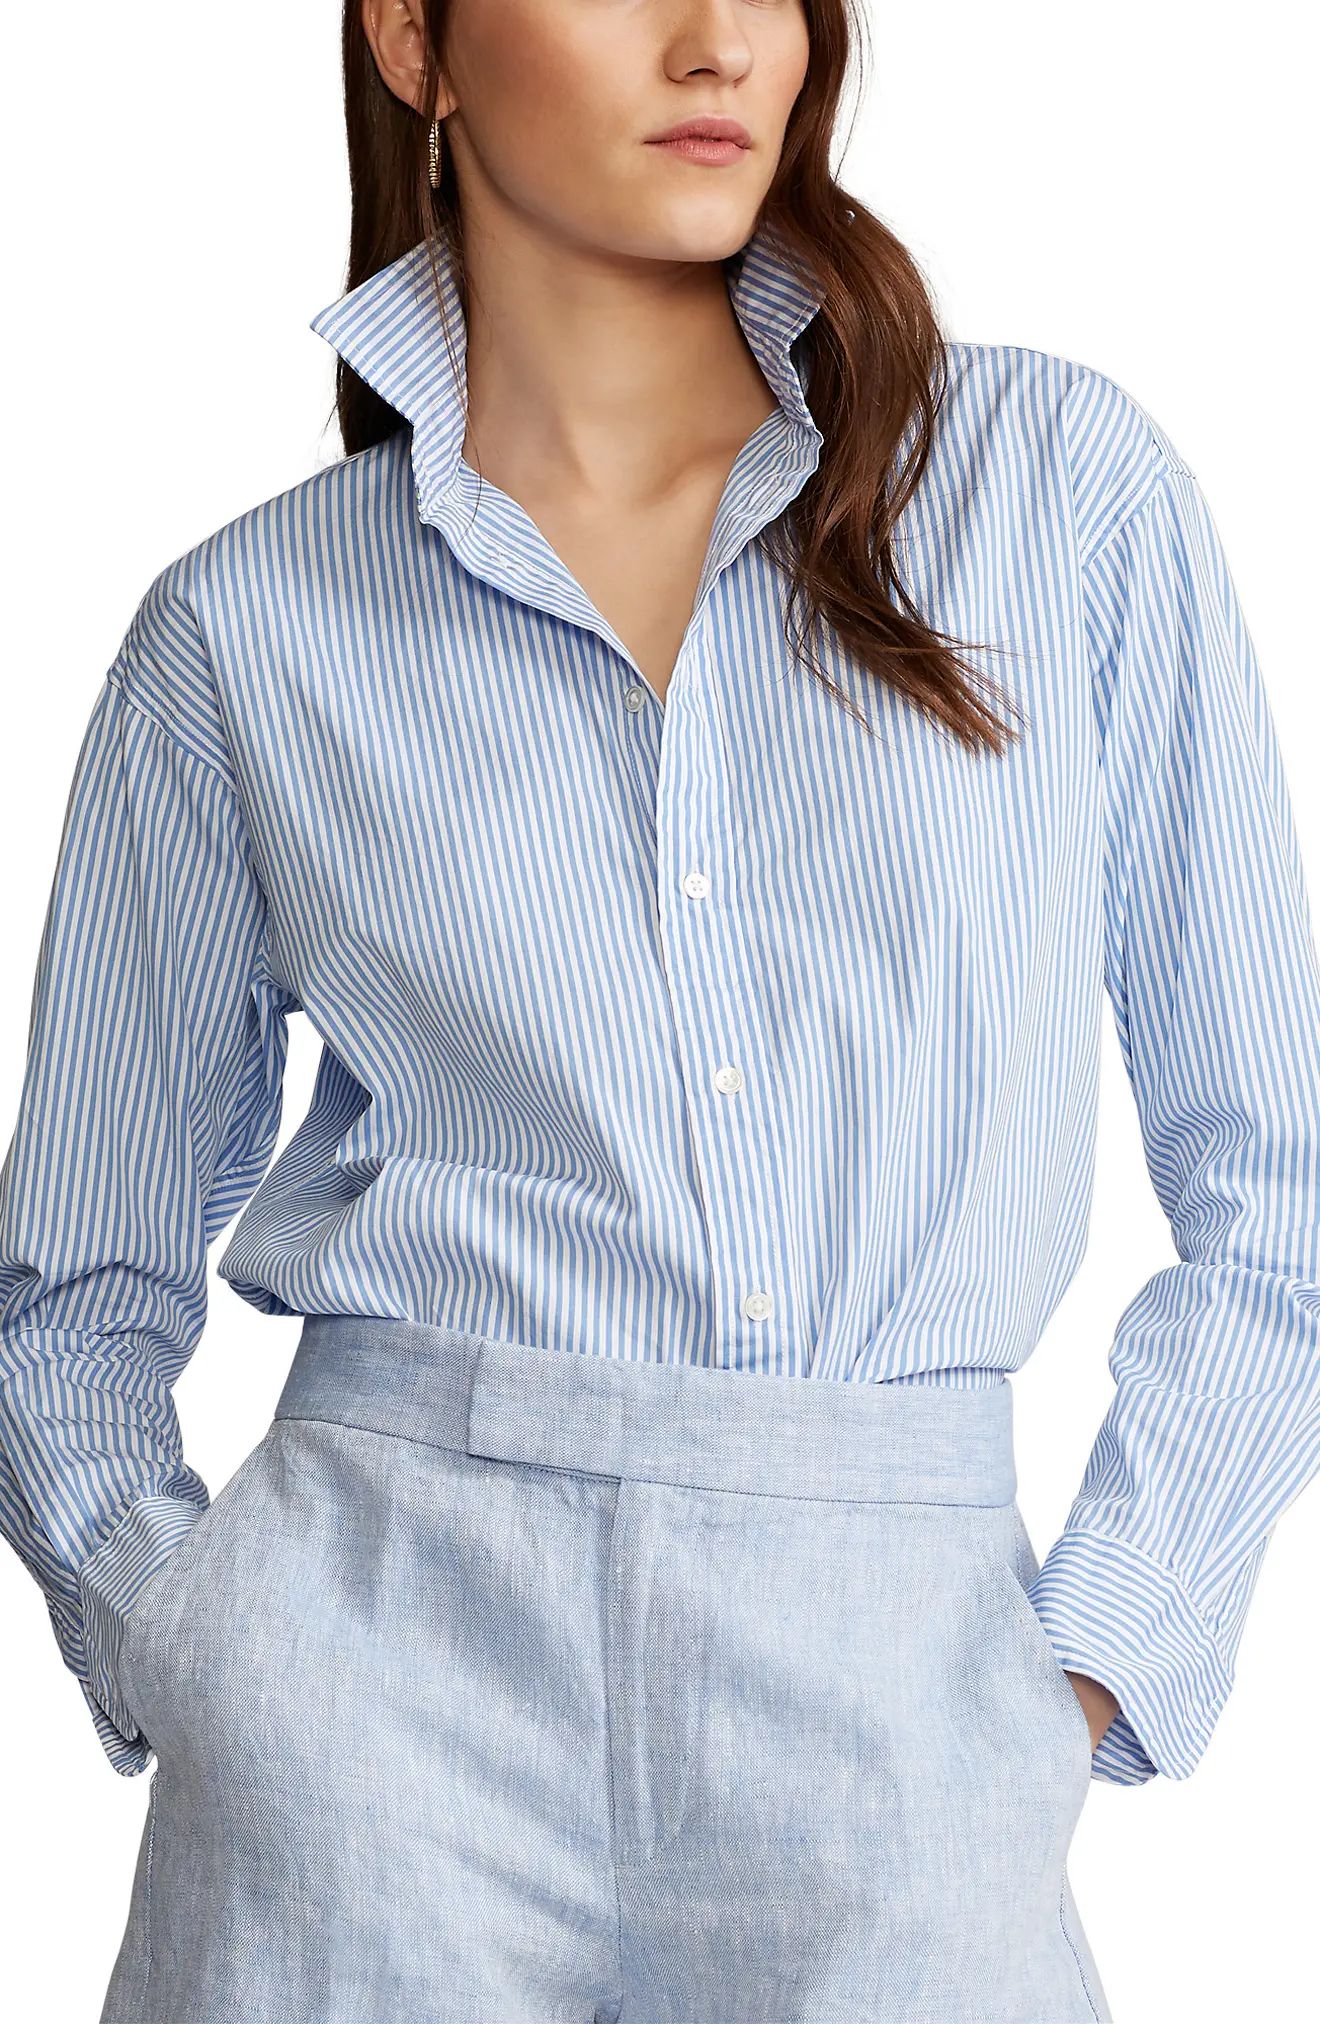 Polo Ralph Lauren Stripe Cotton Shirt in Medium Blue/White at Nordstrom, Size 12 | Nordstrom